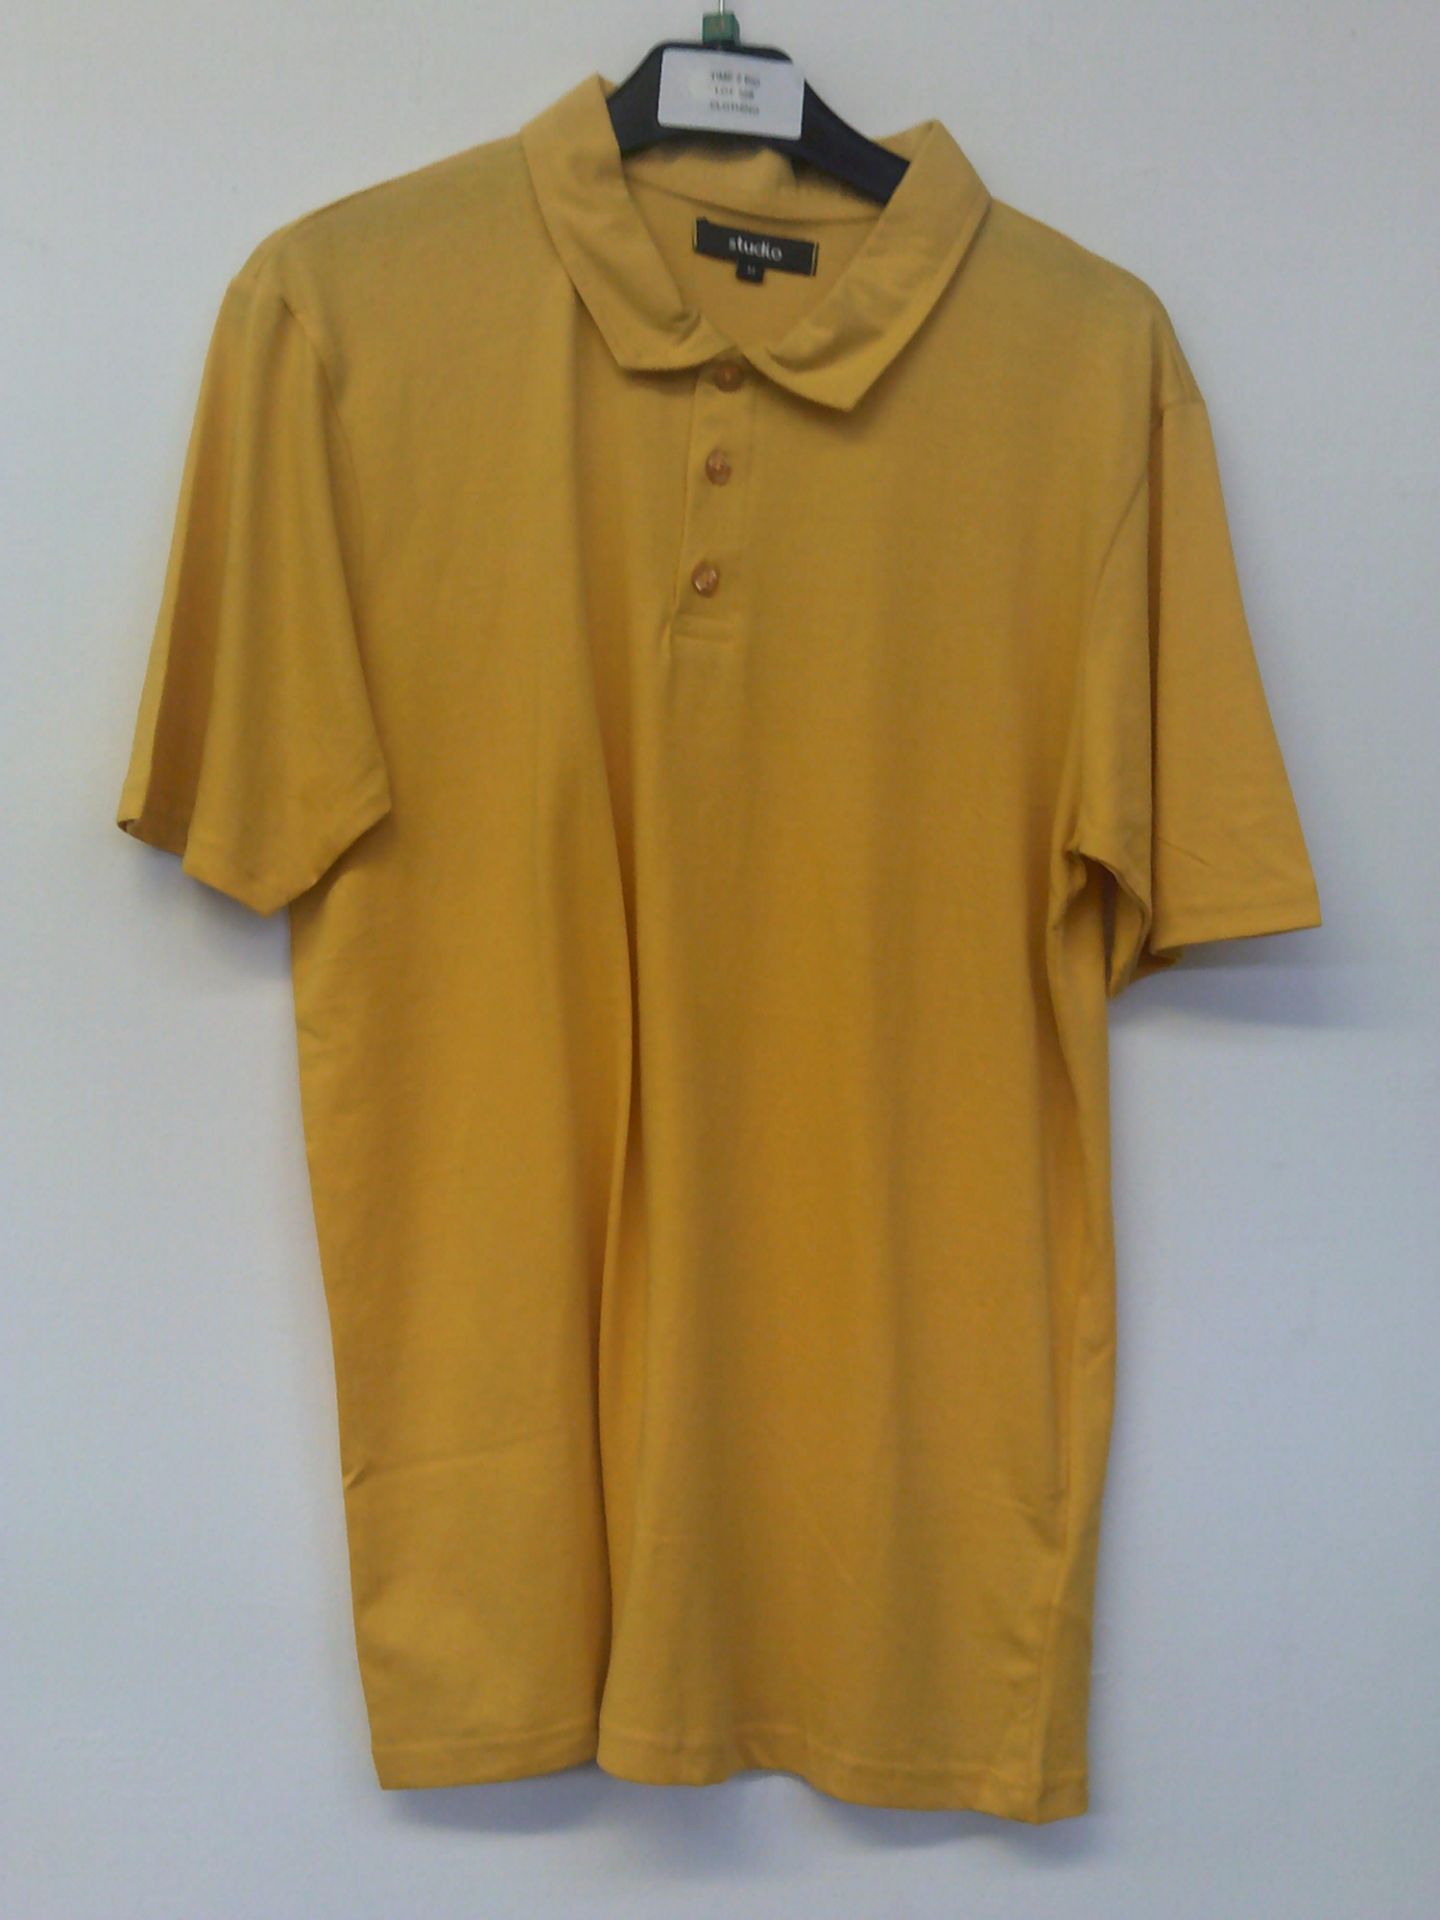 Mens Yellow Polo Shirt Size Medium